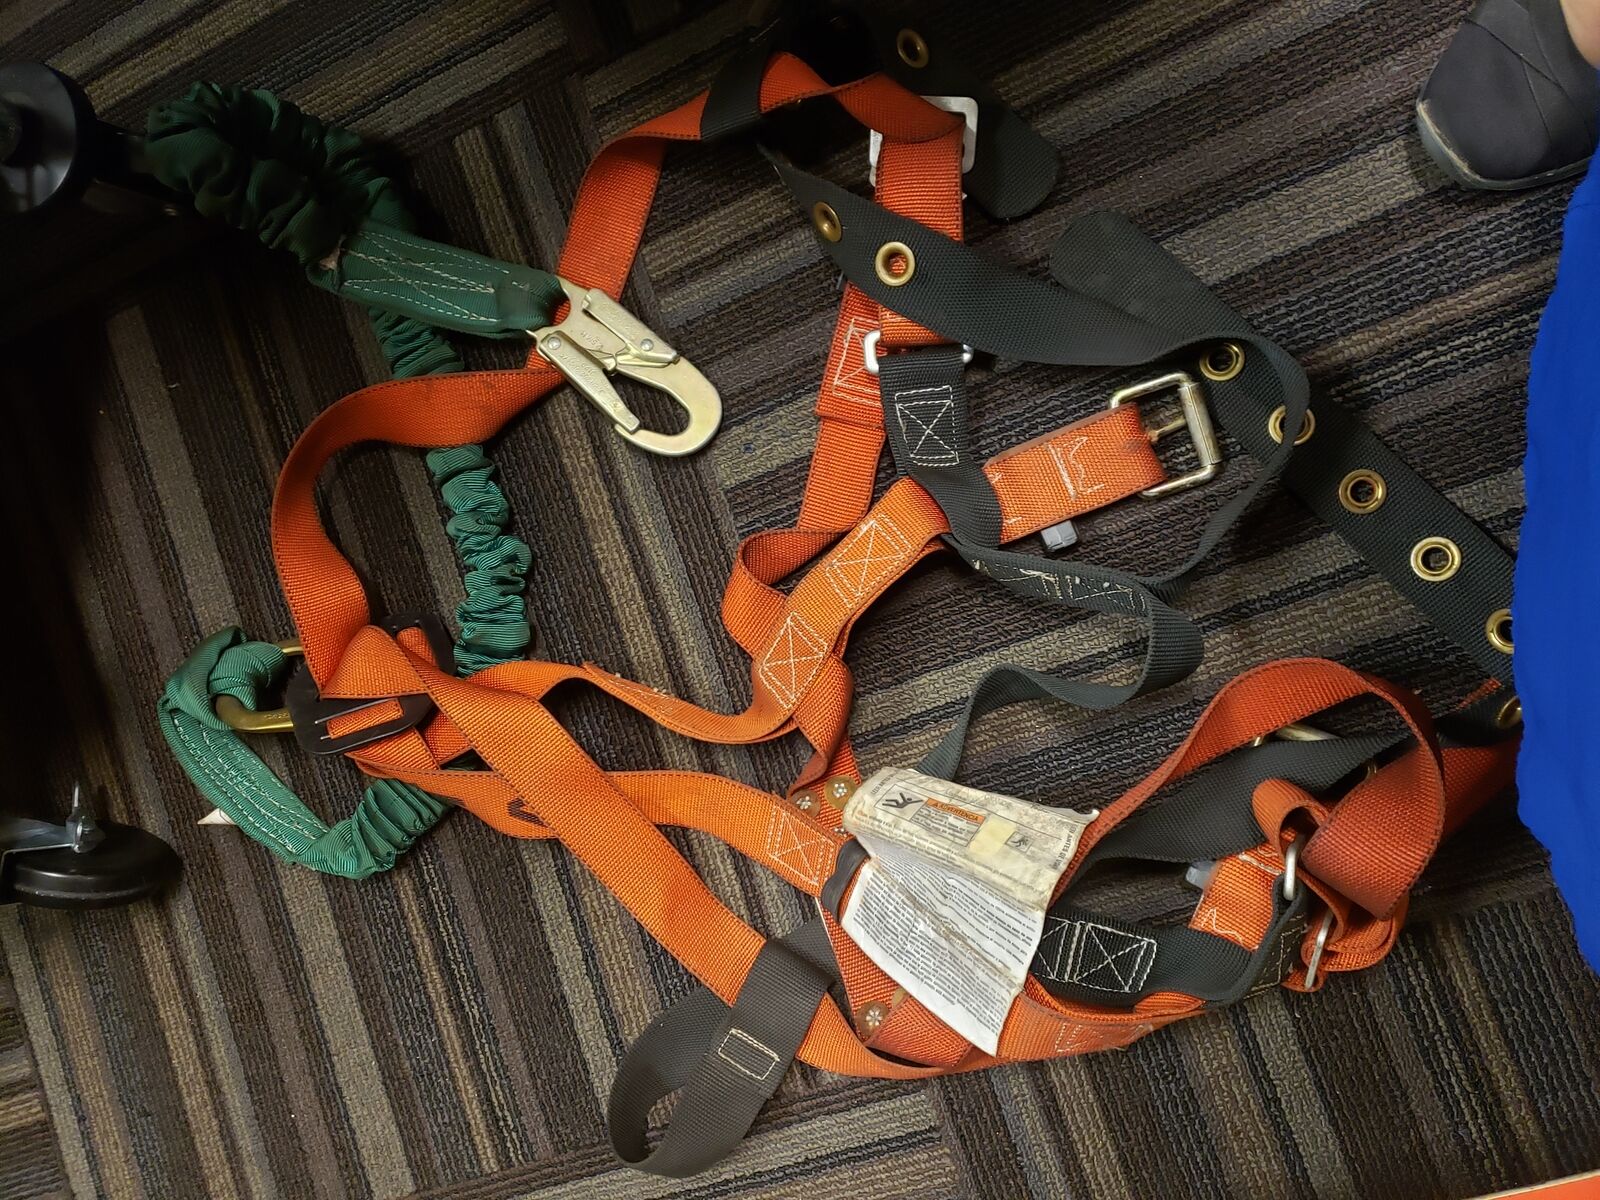 Climbing Belt Tools